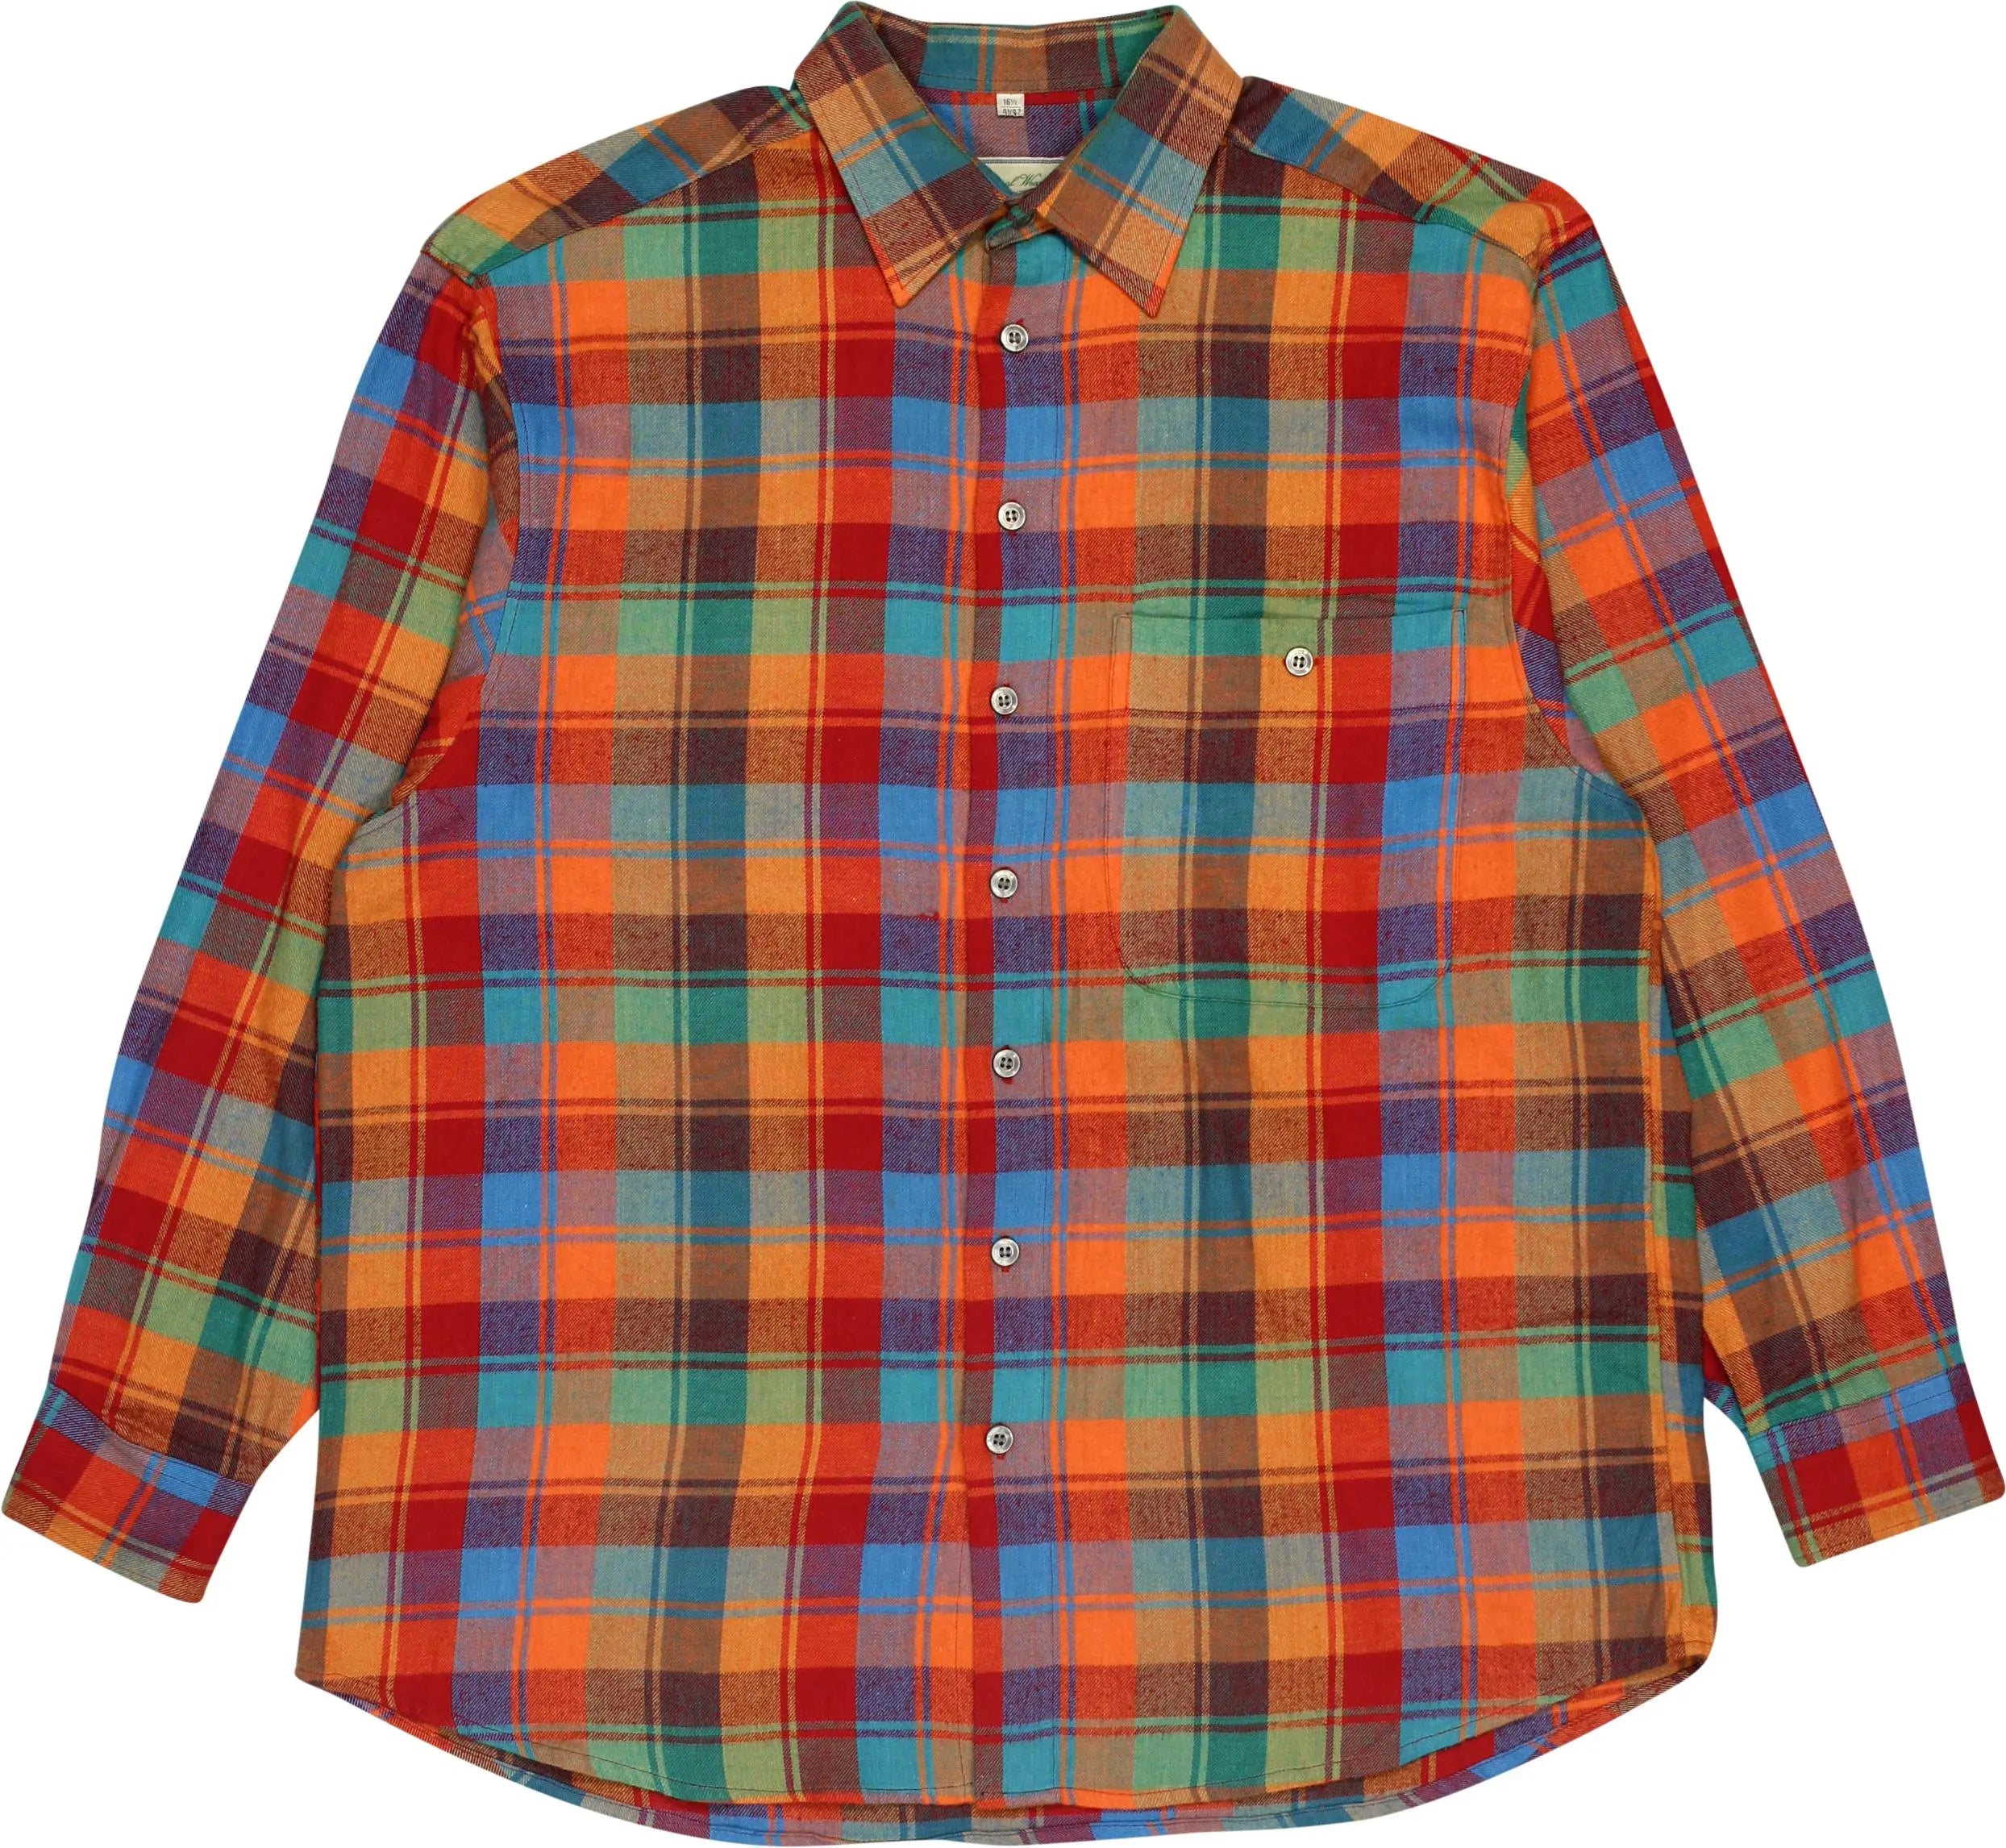 FADED GLORY Corduroy Long Sleeve Shirt Khaki Vintage Used - Shop